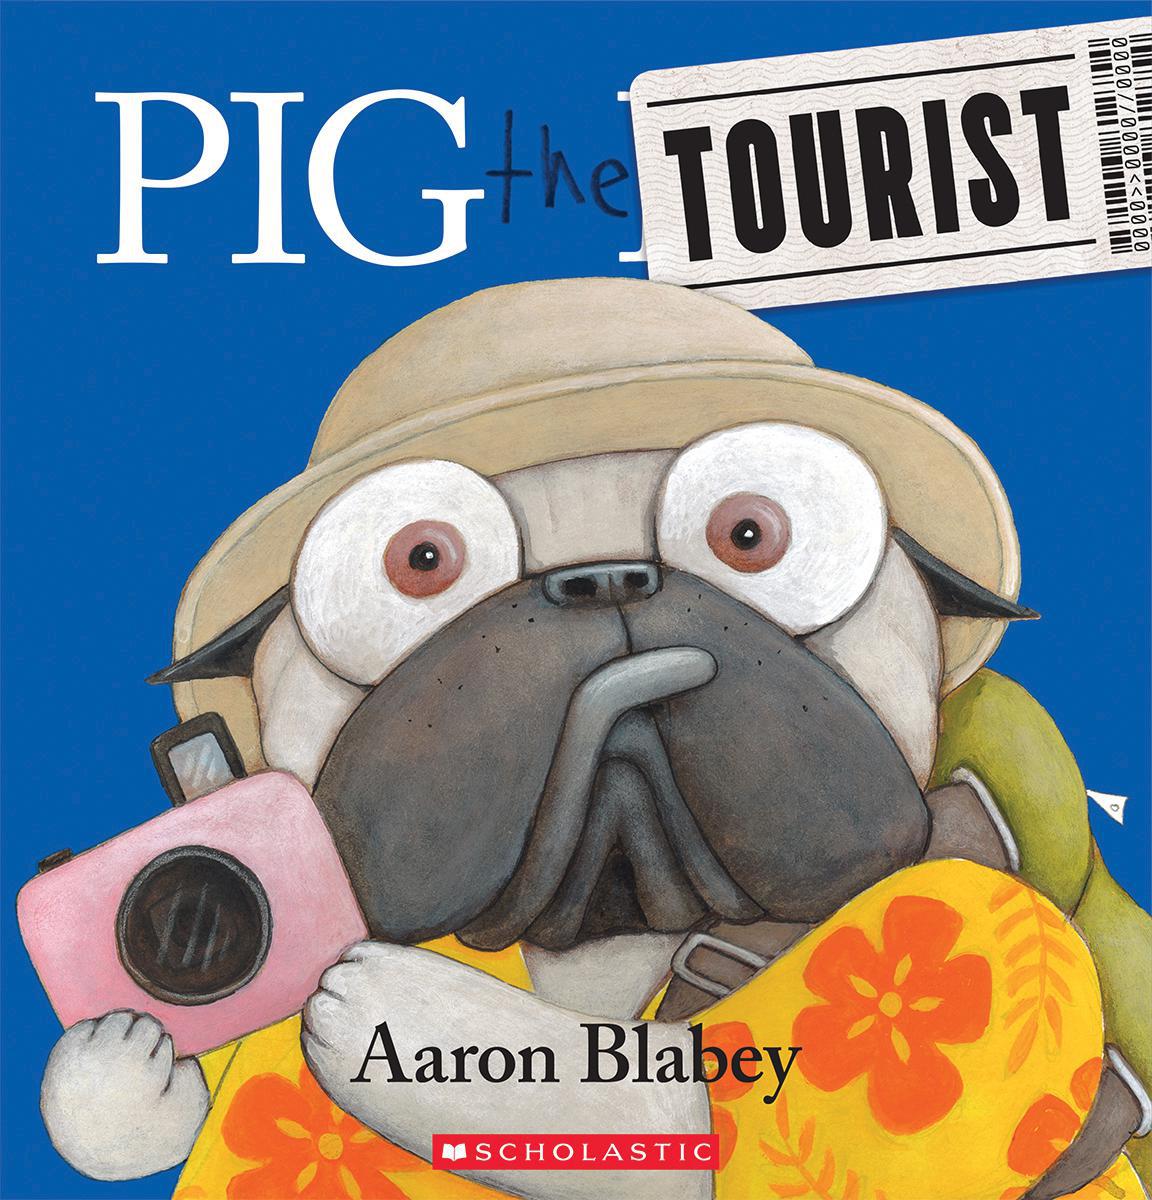  Pig the Tourist 